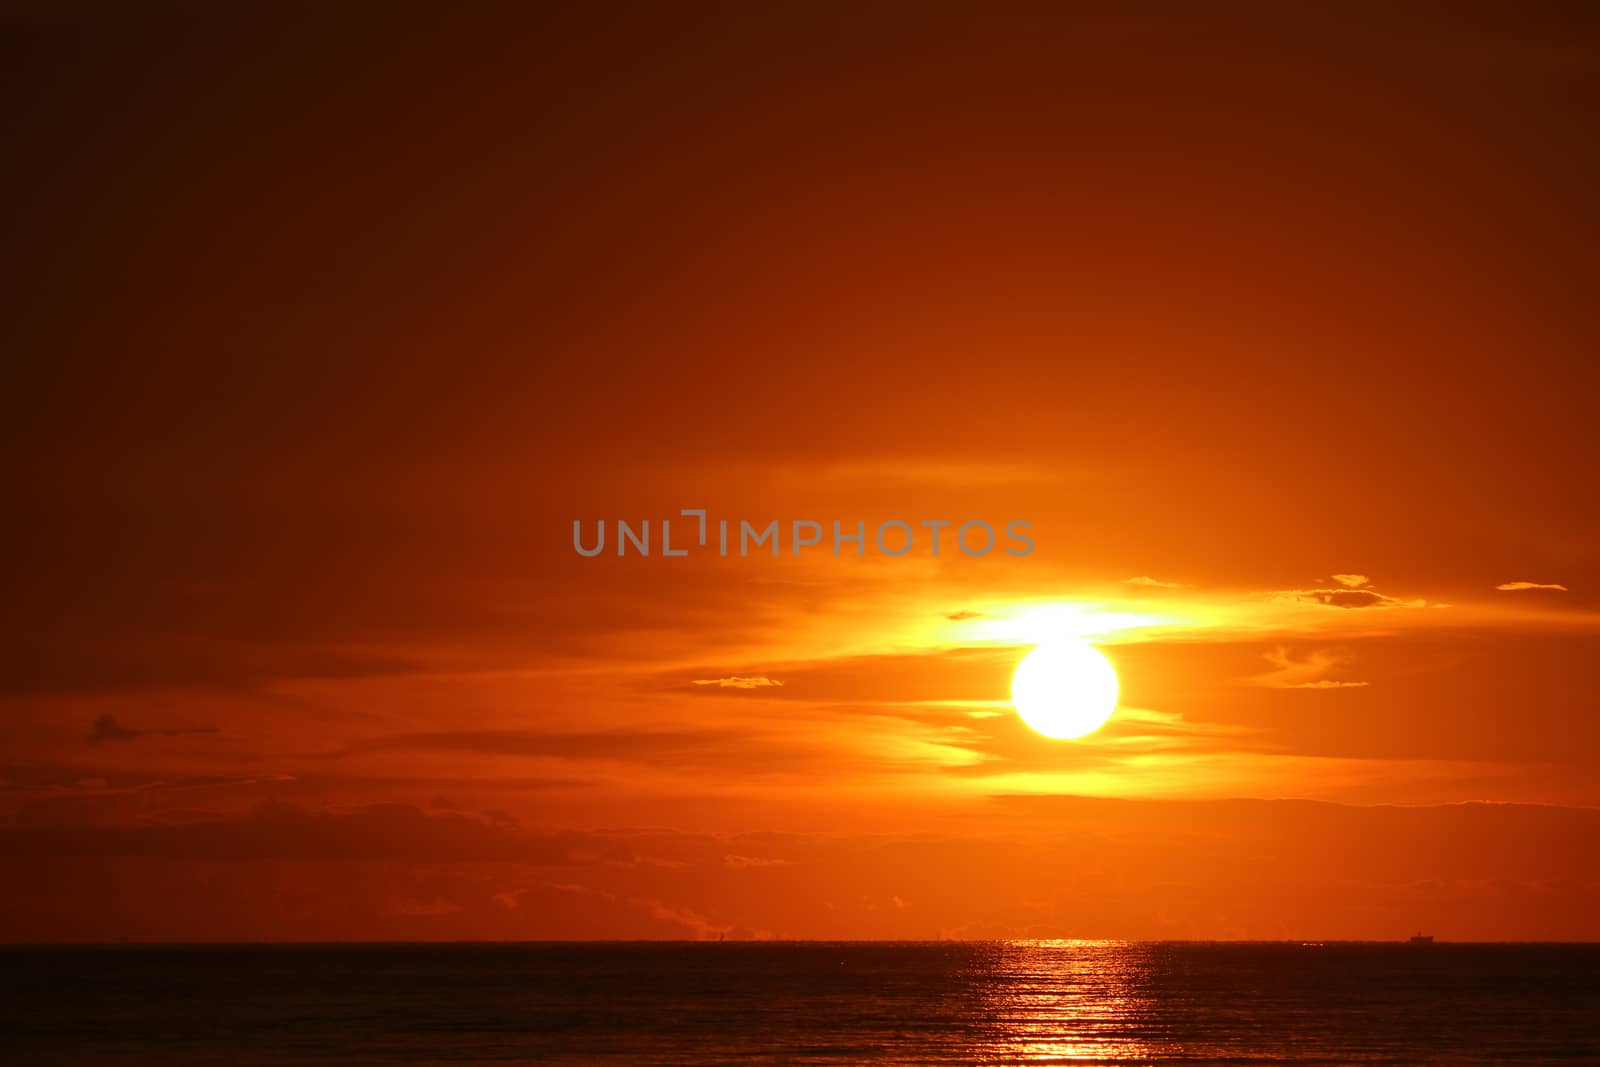 sun dawn back on morning sky silhouette cloud sunlight on sea